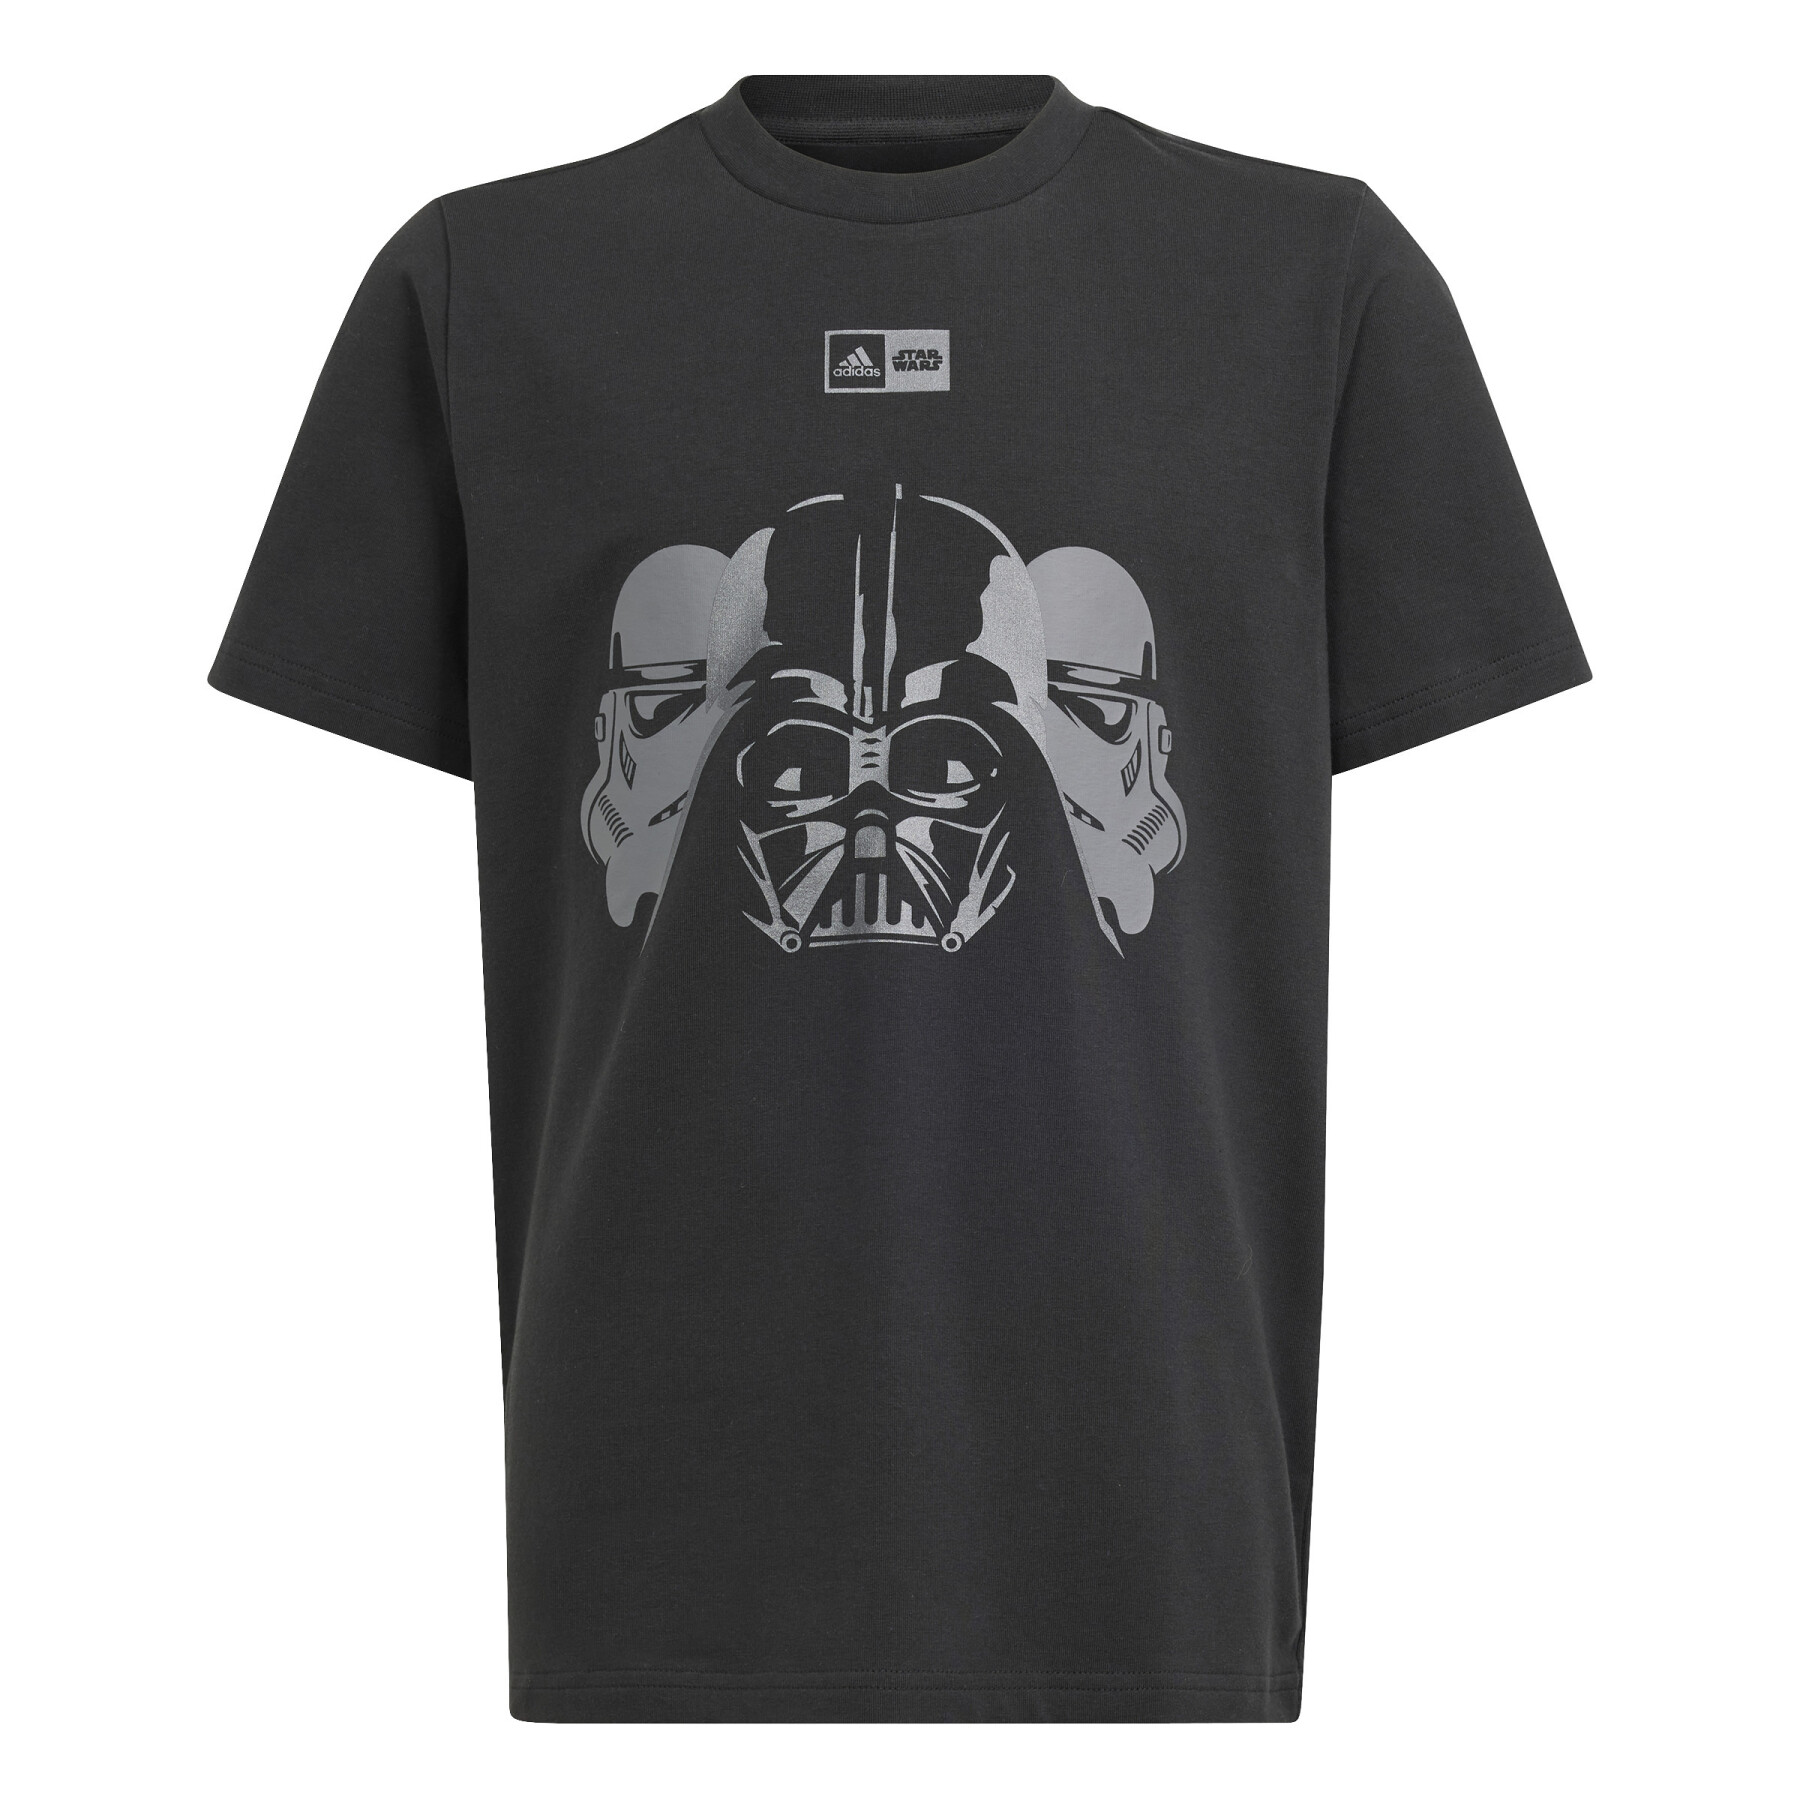 Kinder T-Shirt adidas Star Wars Graphic